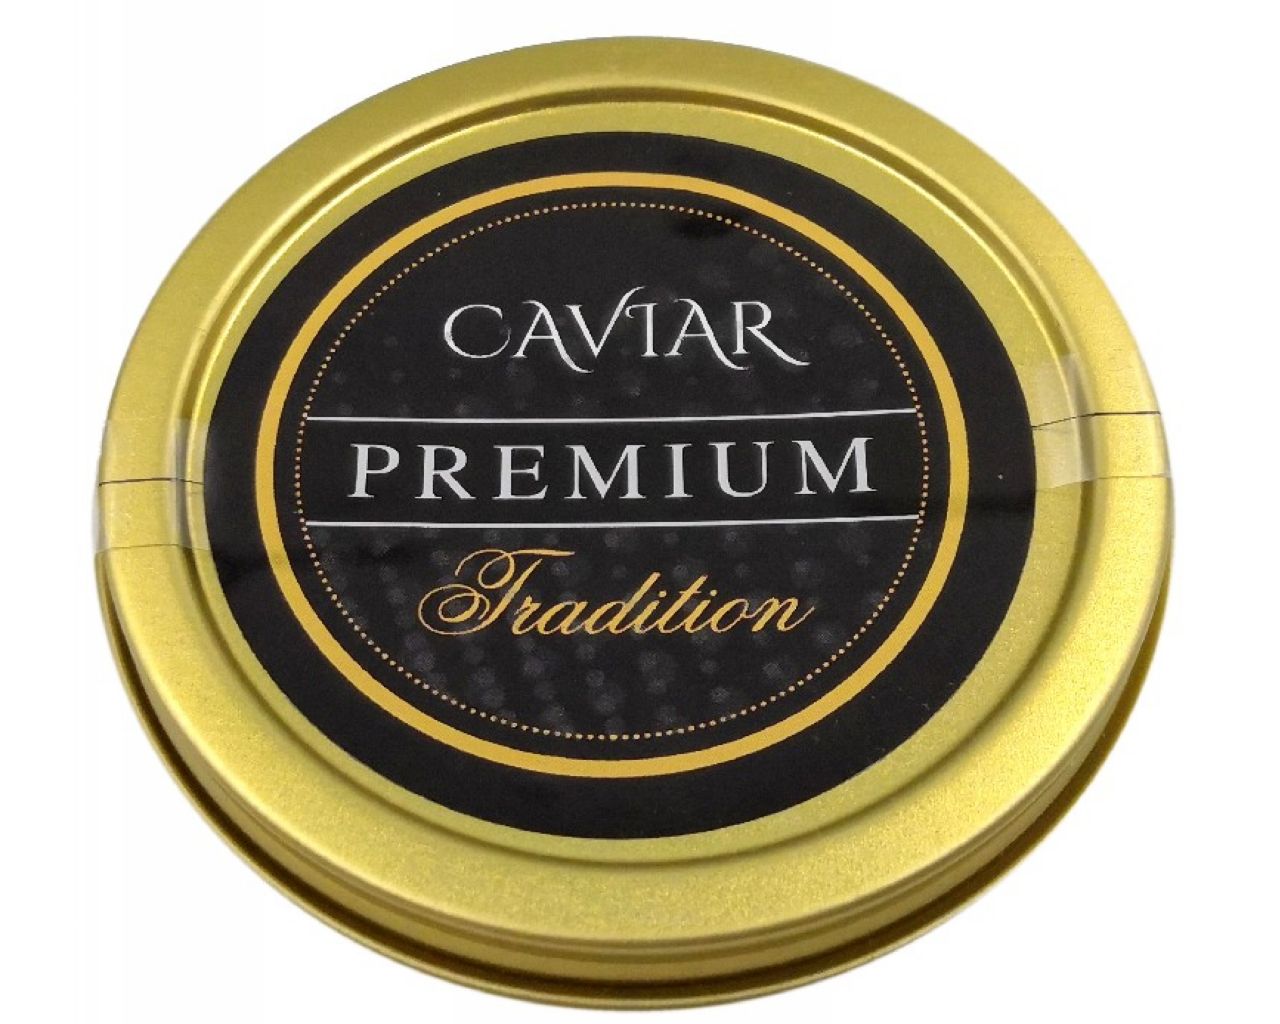 Caviar Tradition